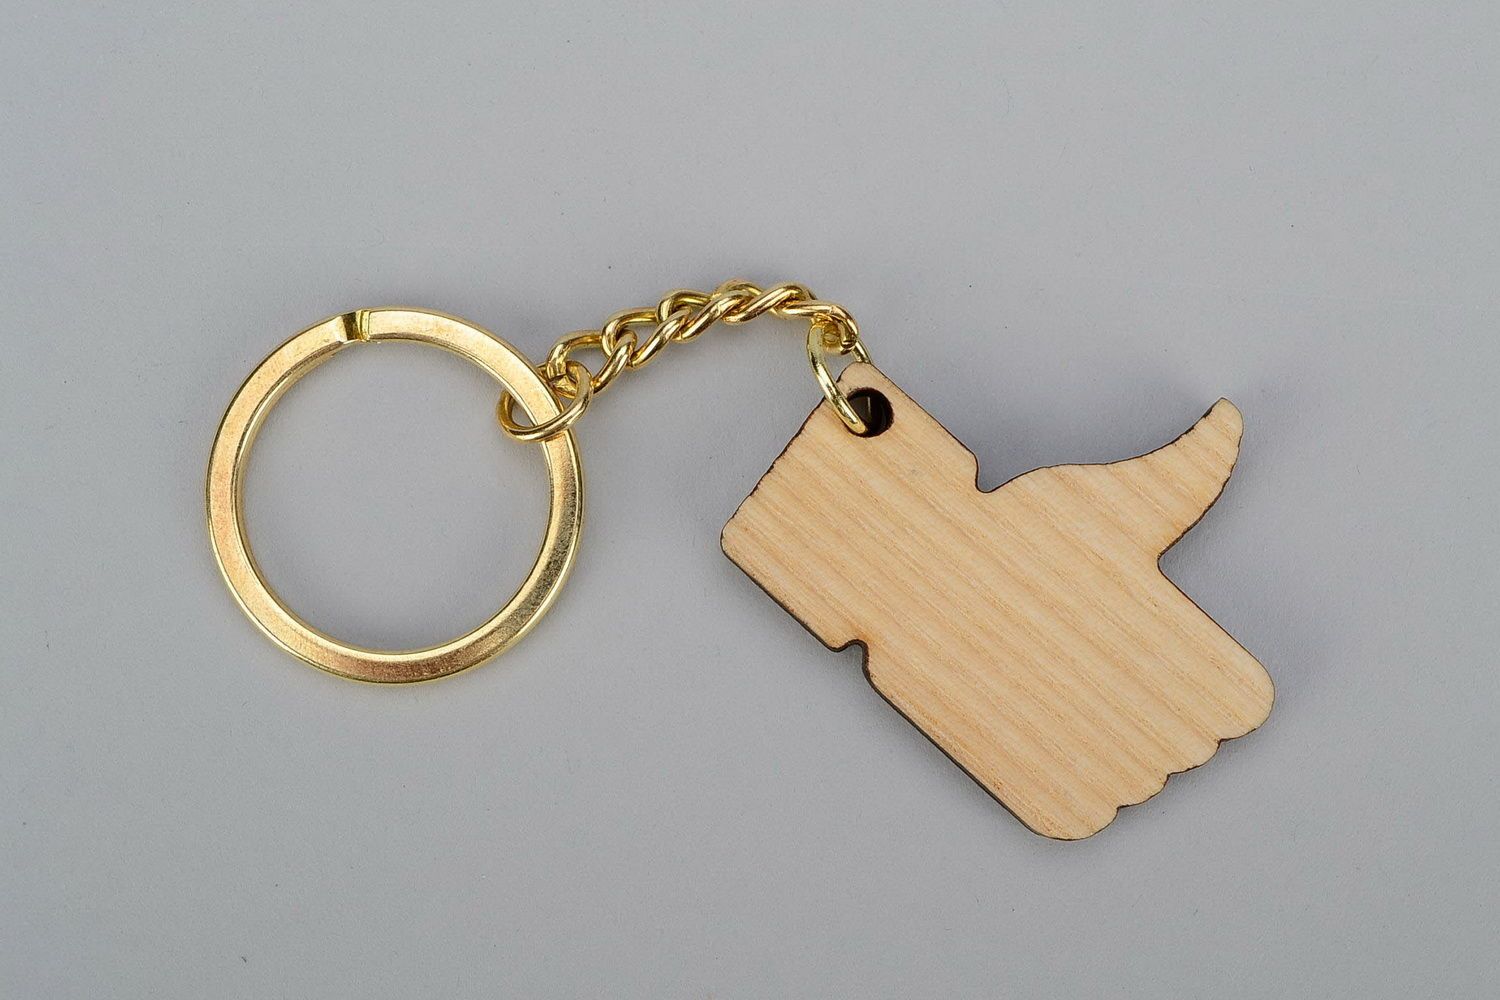 Wooden key chain Like photo 3